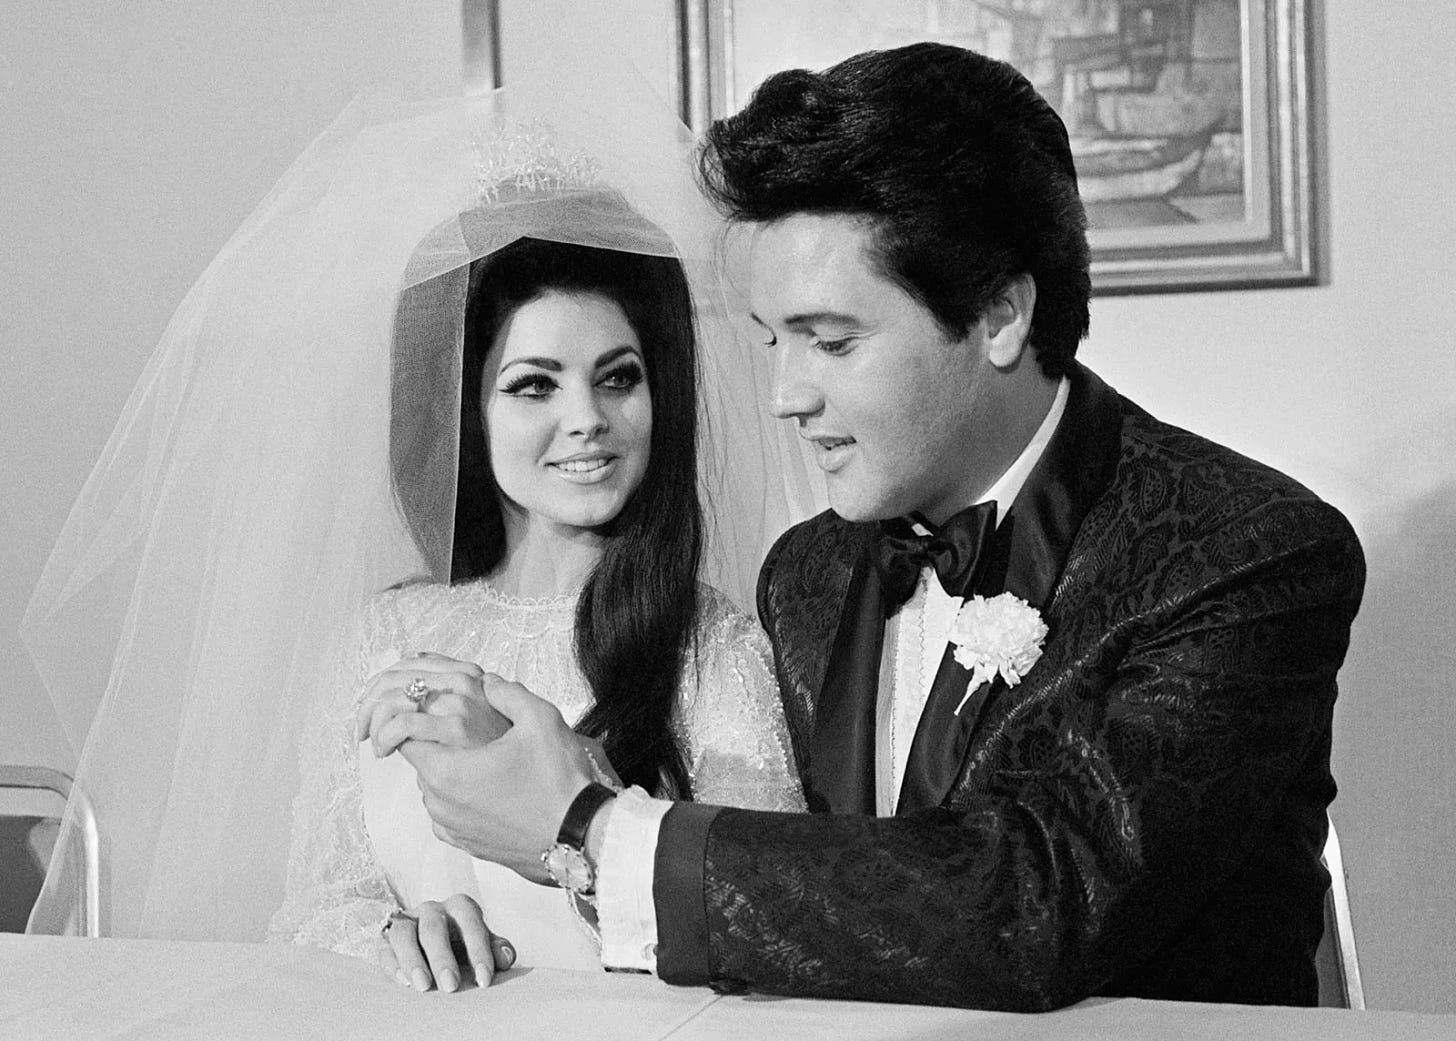 Priscilla and Elvis on their wedding day.